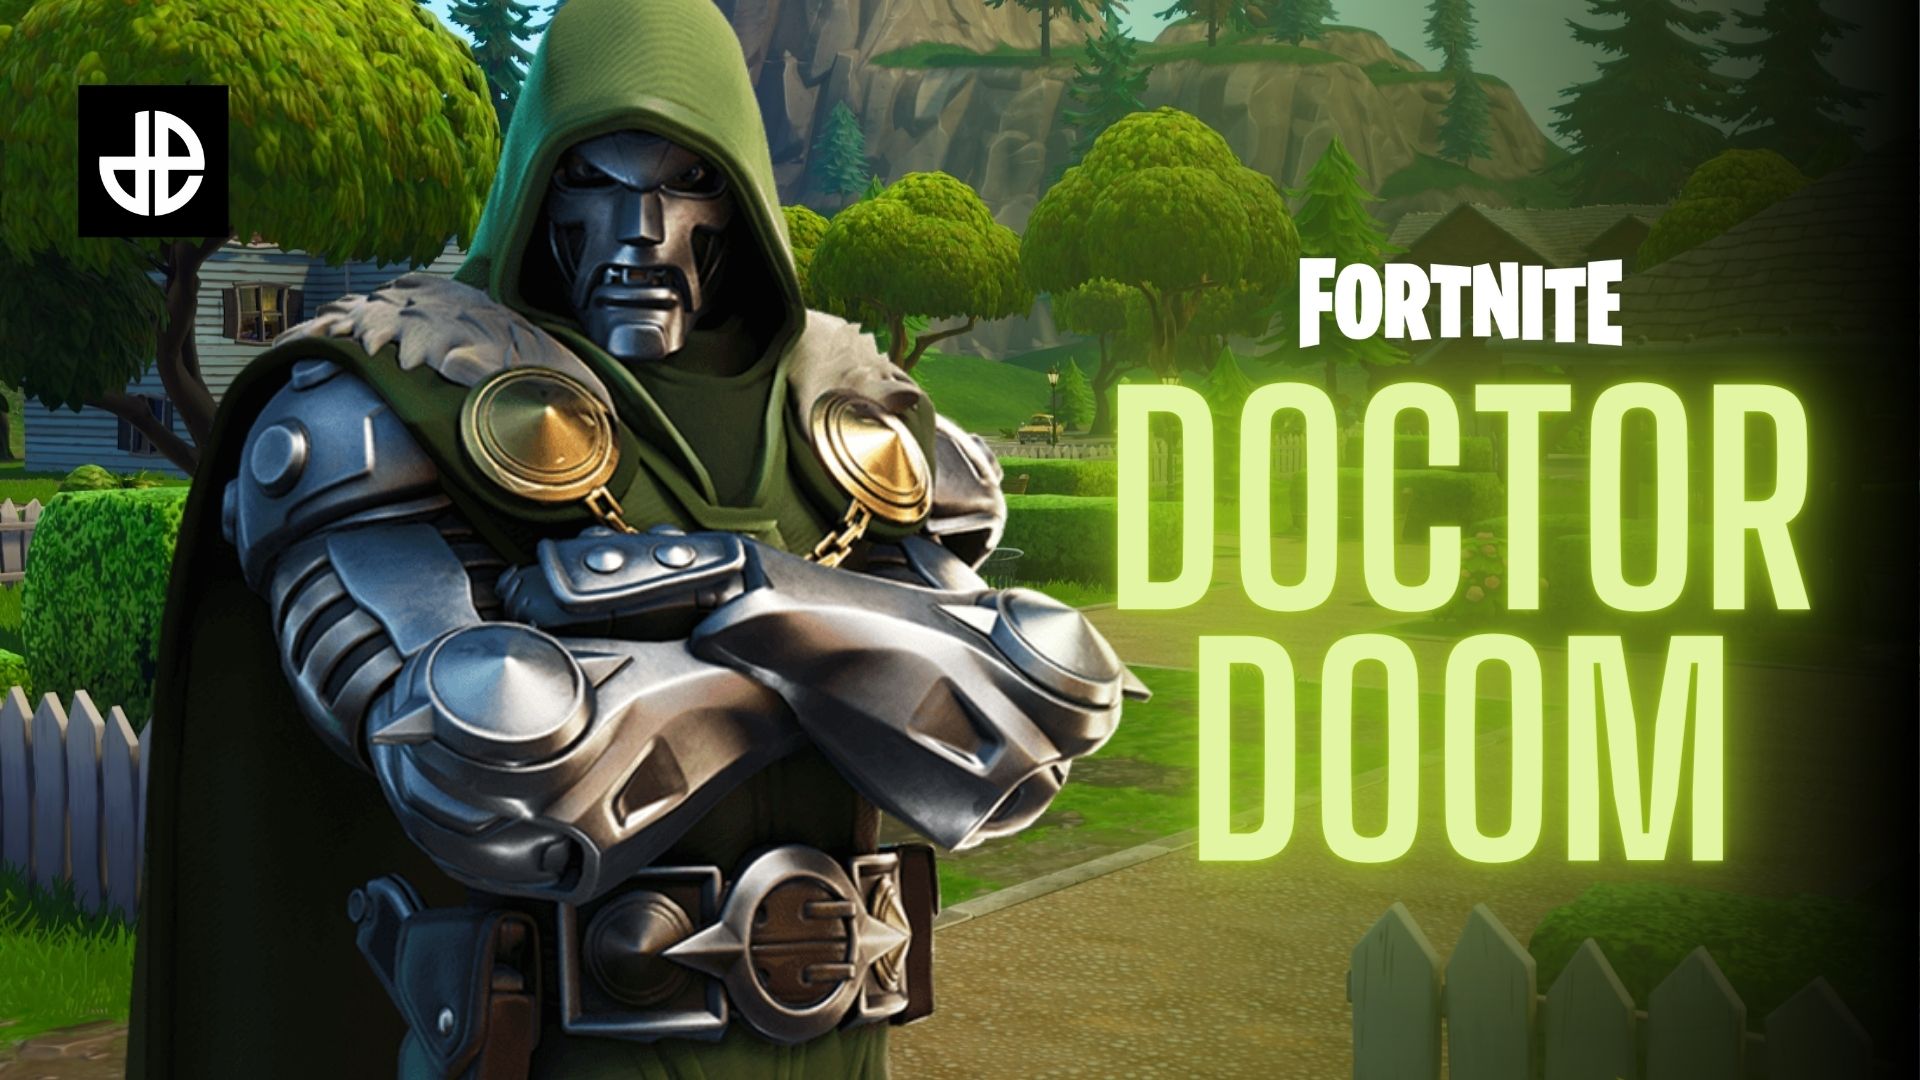 Doctor Doom Fortnite Wallpapers